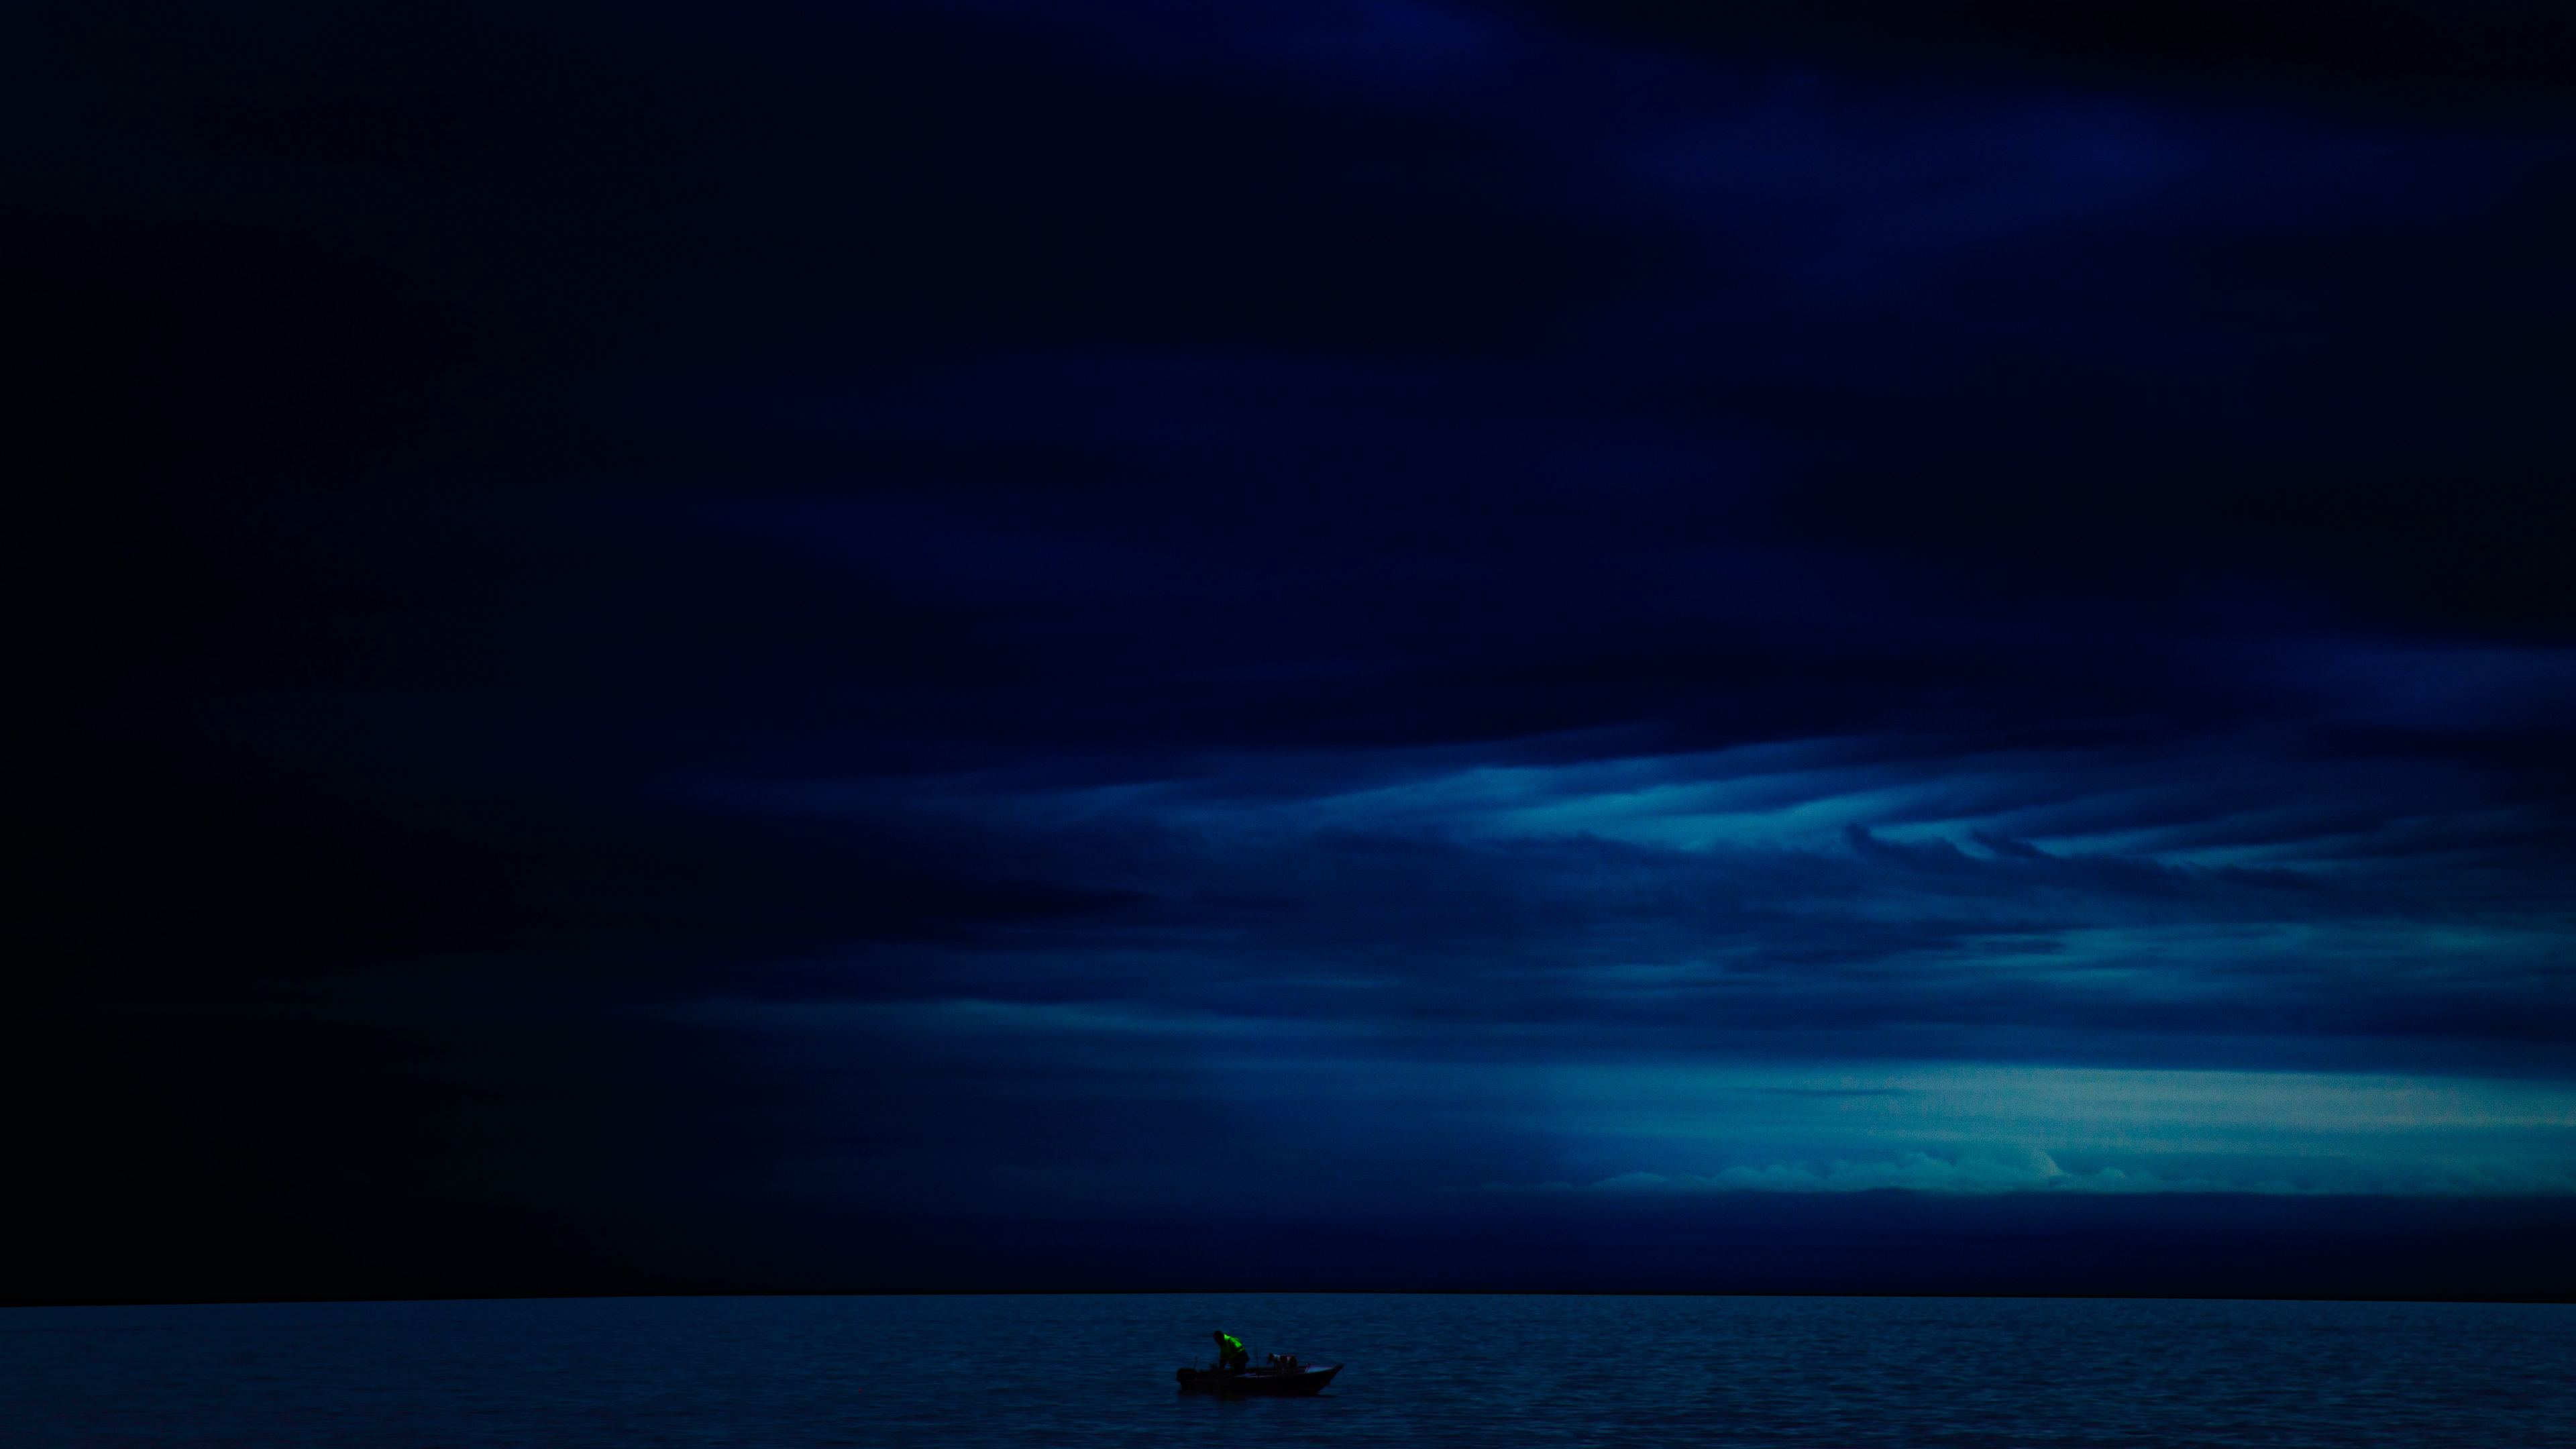 dark evening blue cloudy alone boat in ocean 4k 1540143378 - Dark Evening Blue Cloudy Alone Boat In Ocean 4k - ocean wallpapers, nature wallpapers, hd-wallpapers, evening wallpapers, dark wallpapers, clouds wallpapers, boat wallpapers, 5k wallpapers, 4k-wallpapers